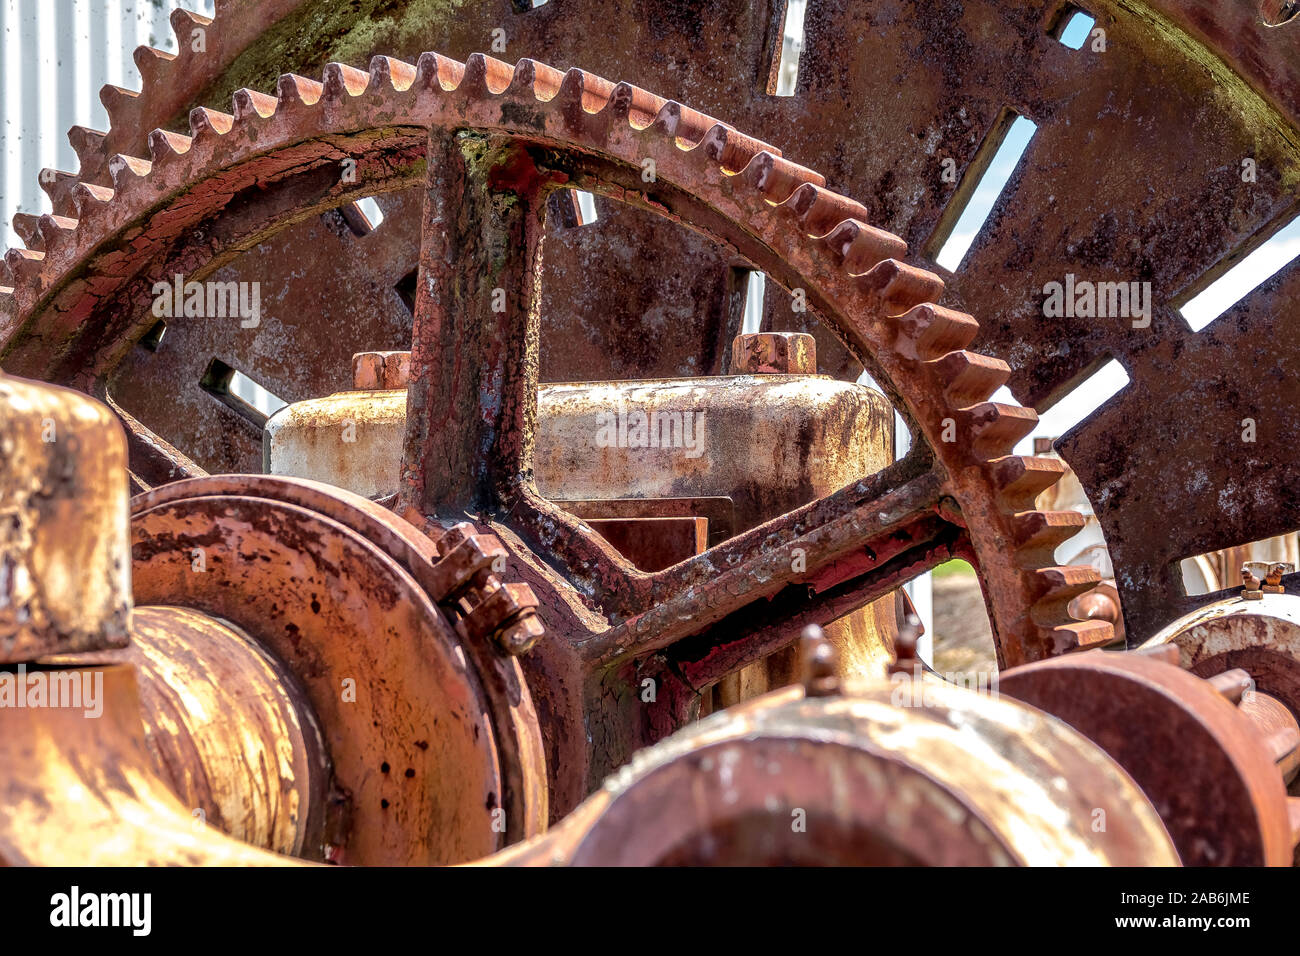 Rusty roues mécaniques abstract composition texturée Banque D'Images